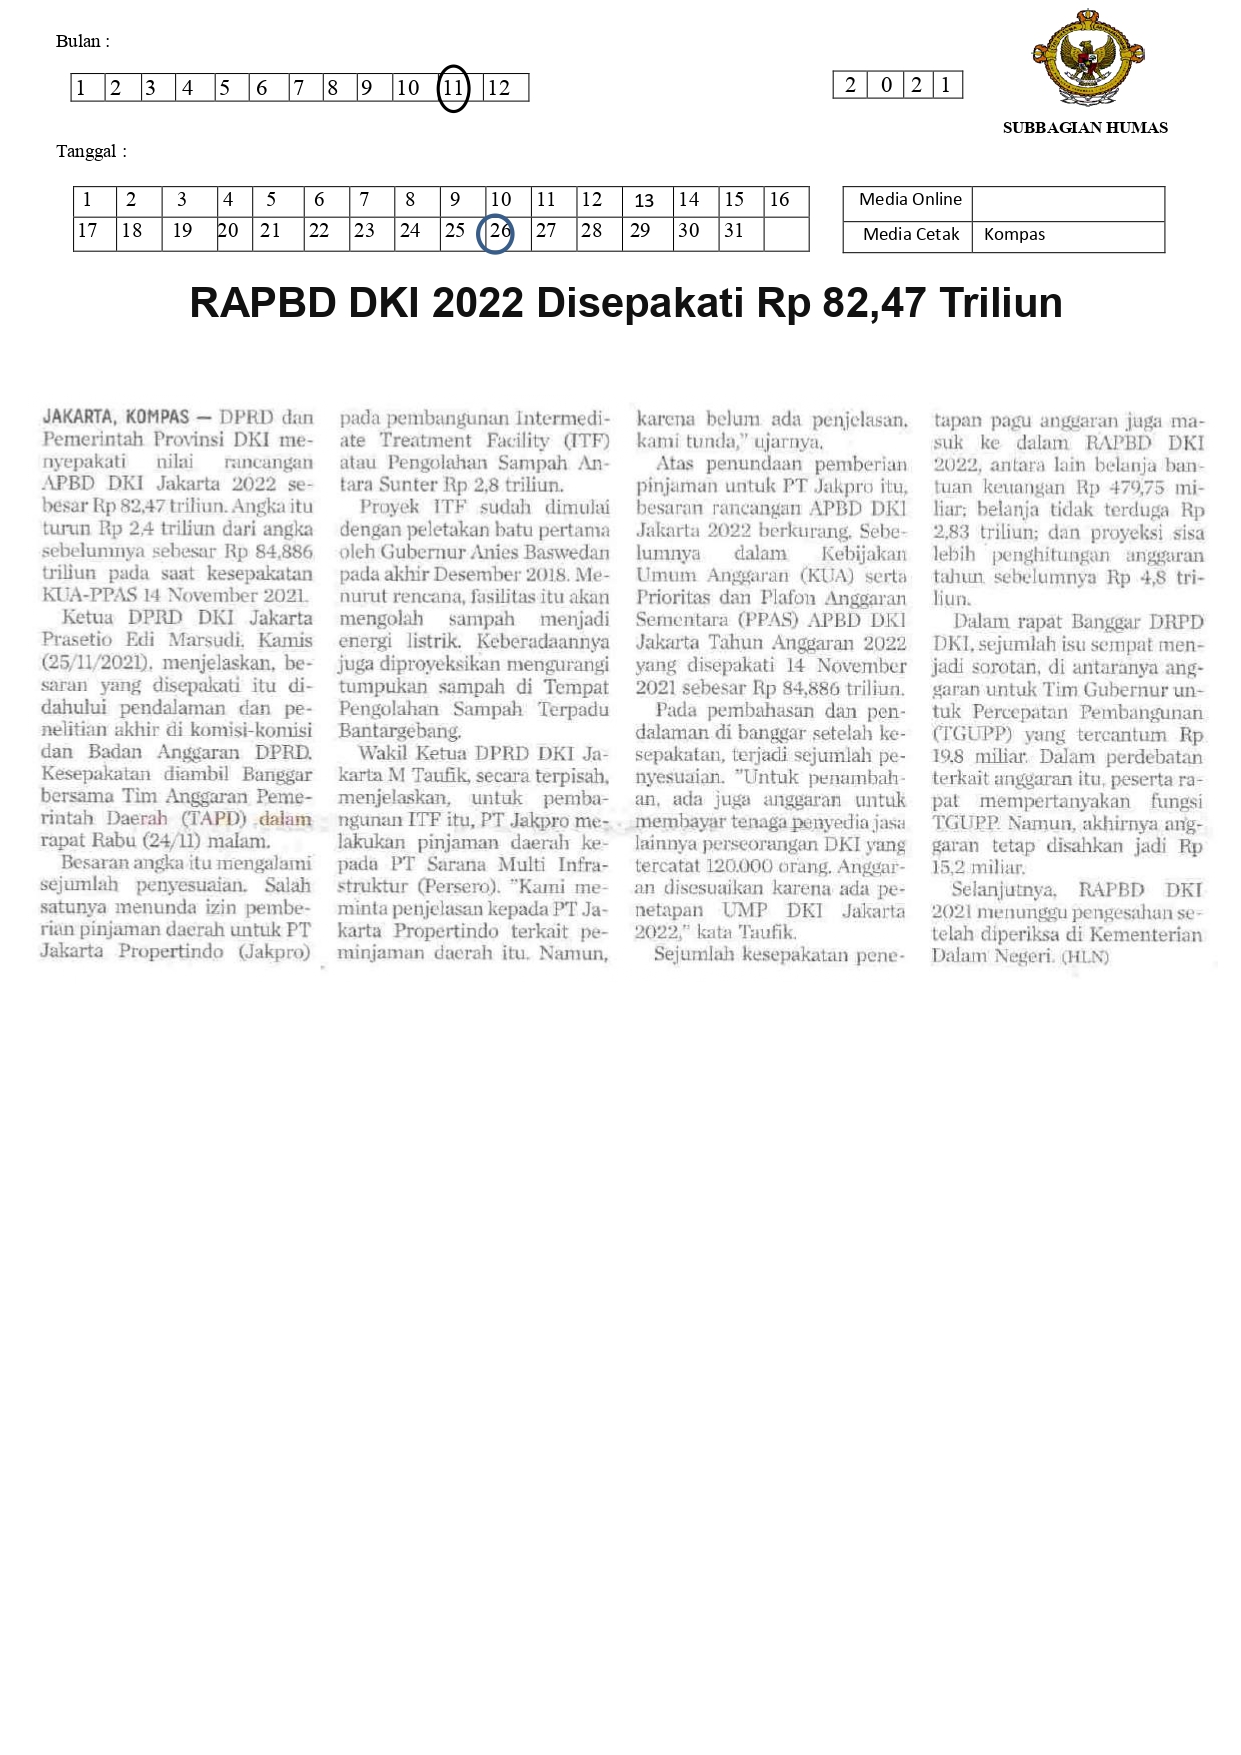 RAPBD DKI 2022 Disepakati Rp 82,47 Triliun